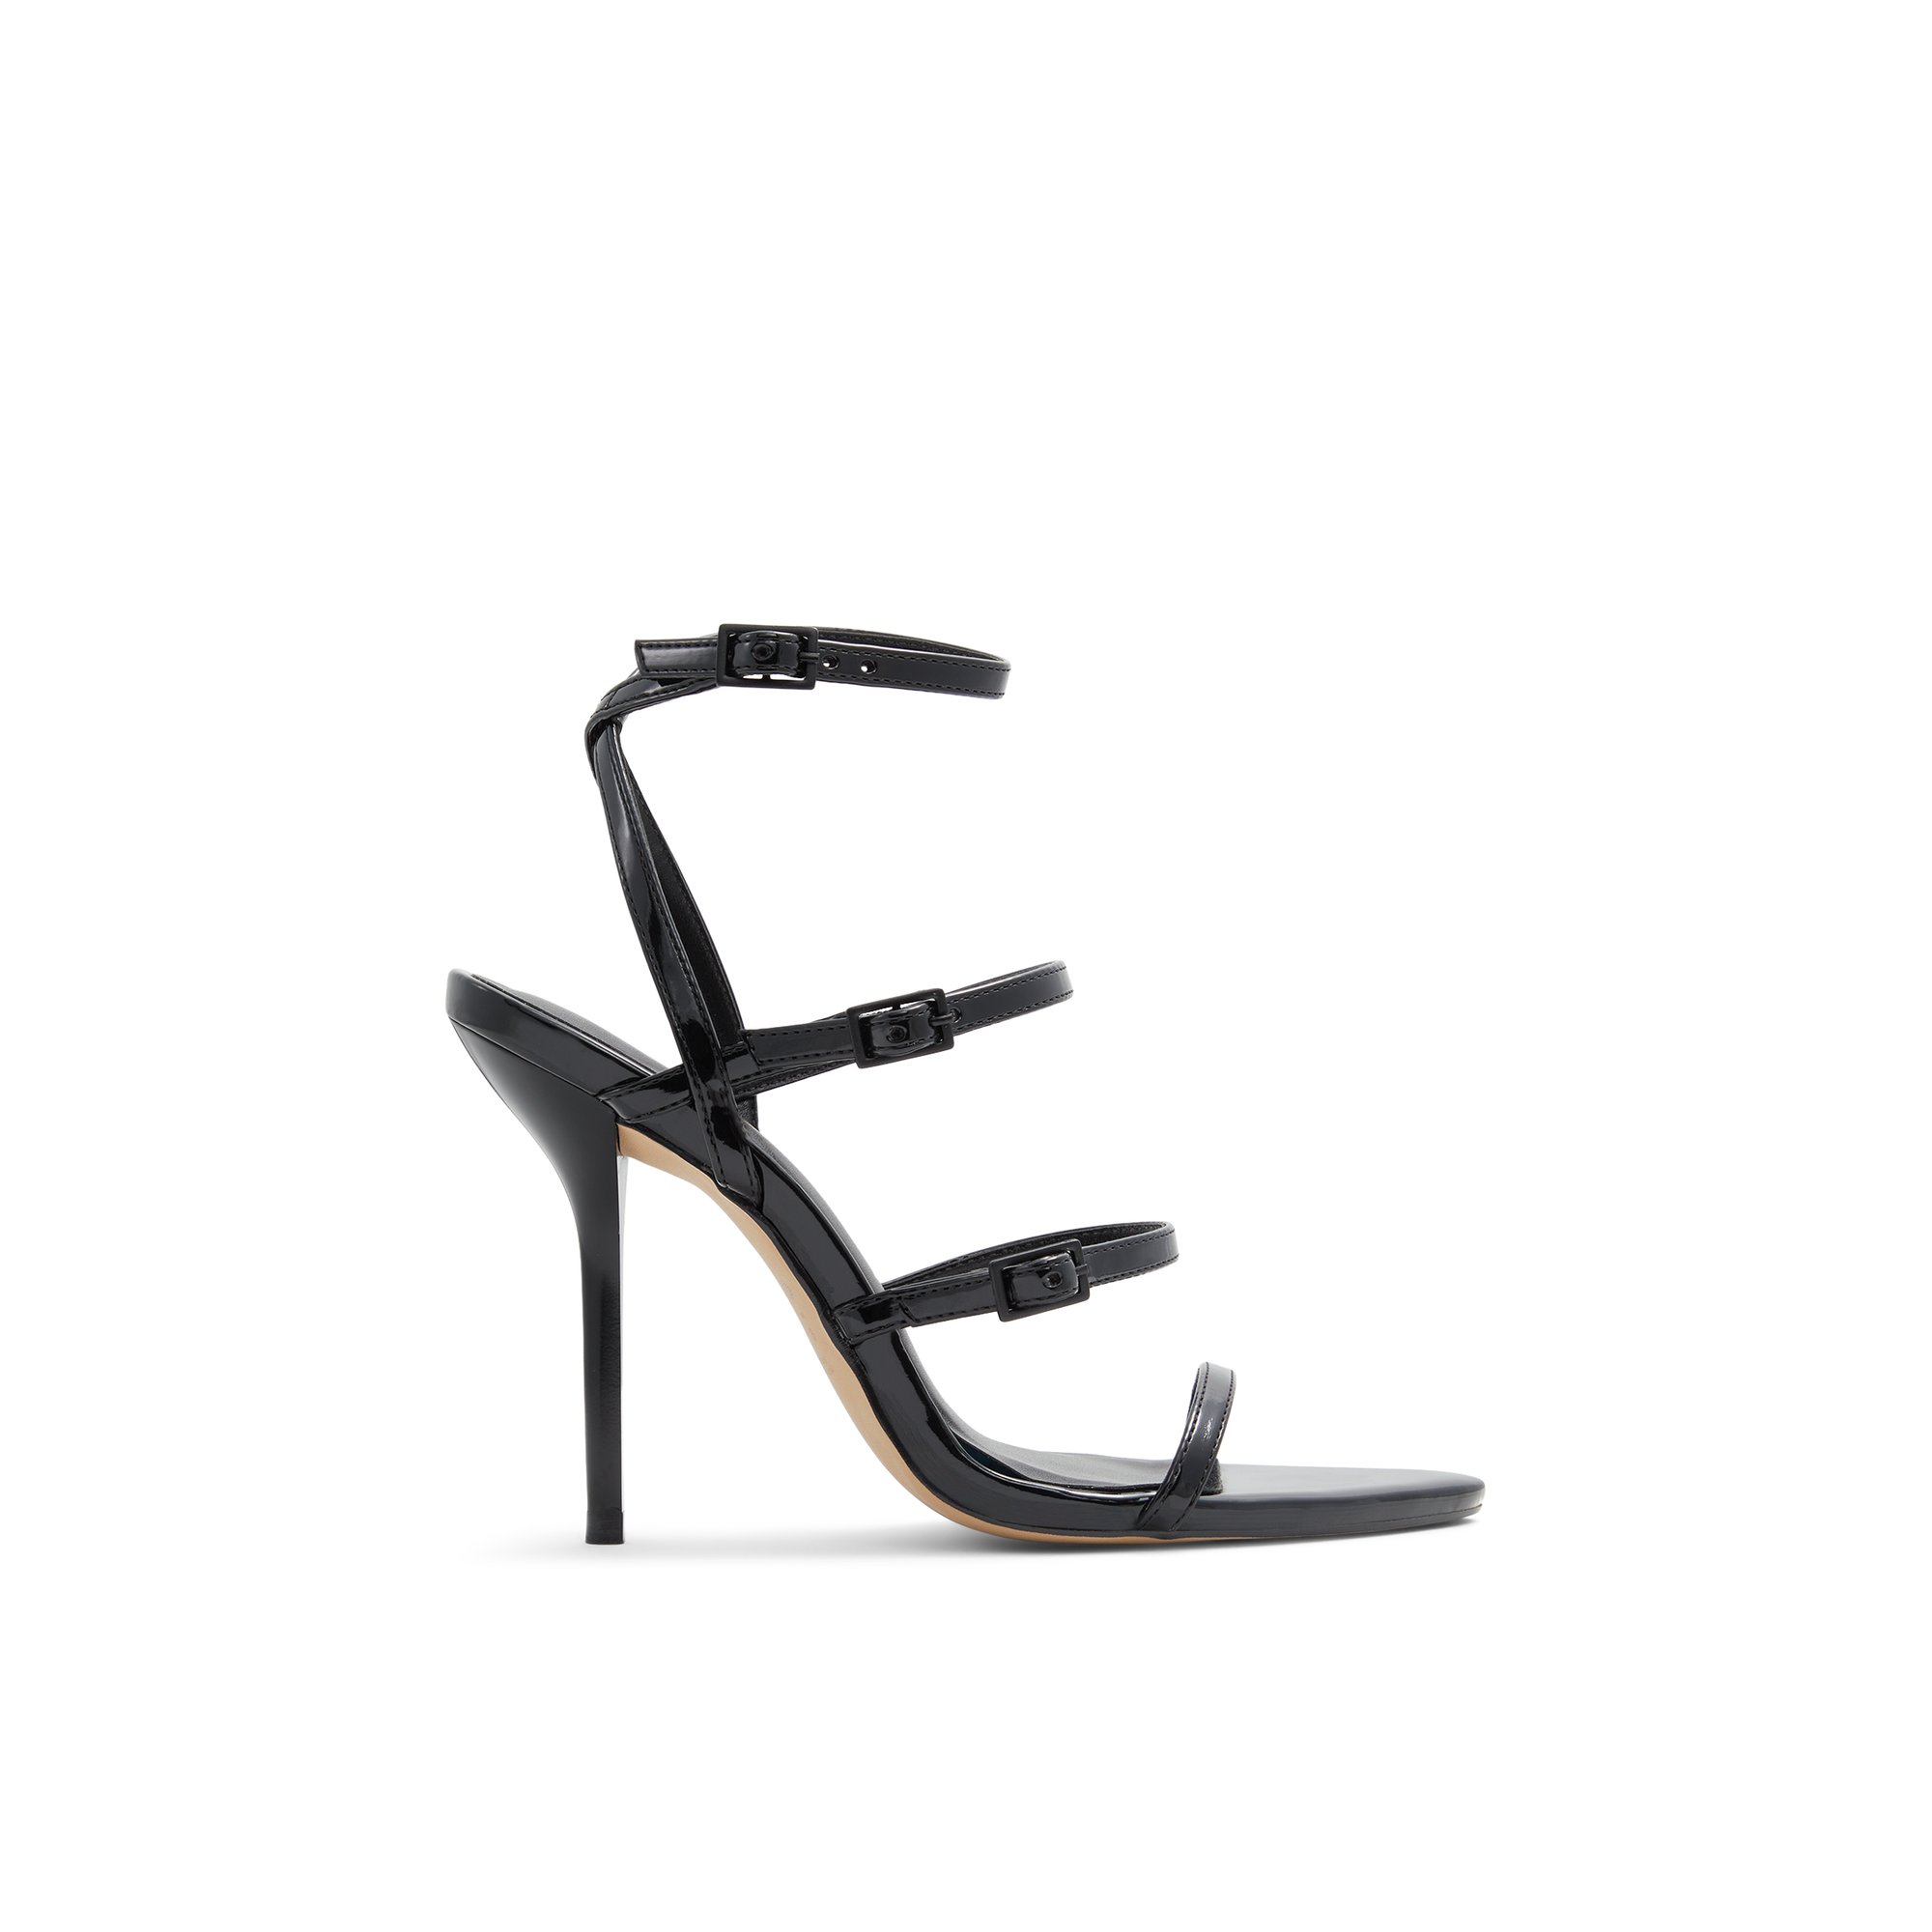 ALDO Ulba - Women's Strappy Sandal Sandals - Black